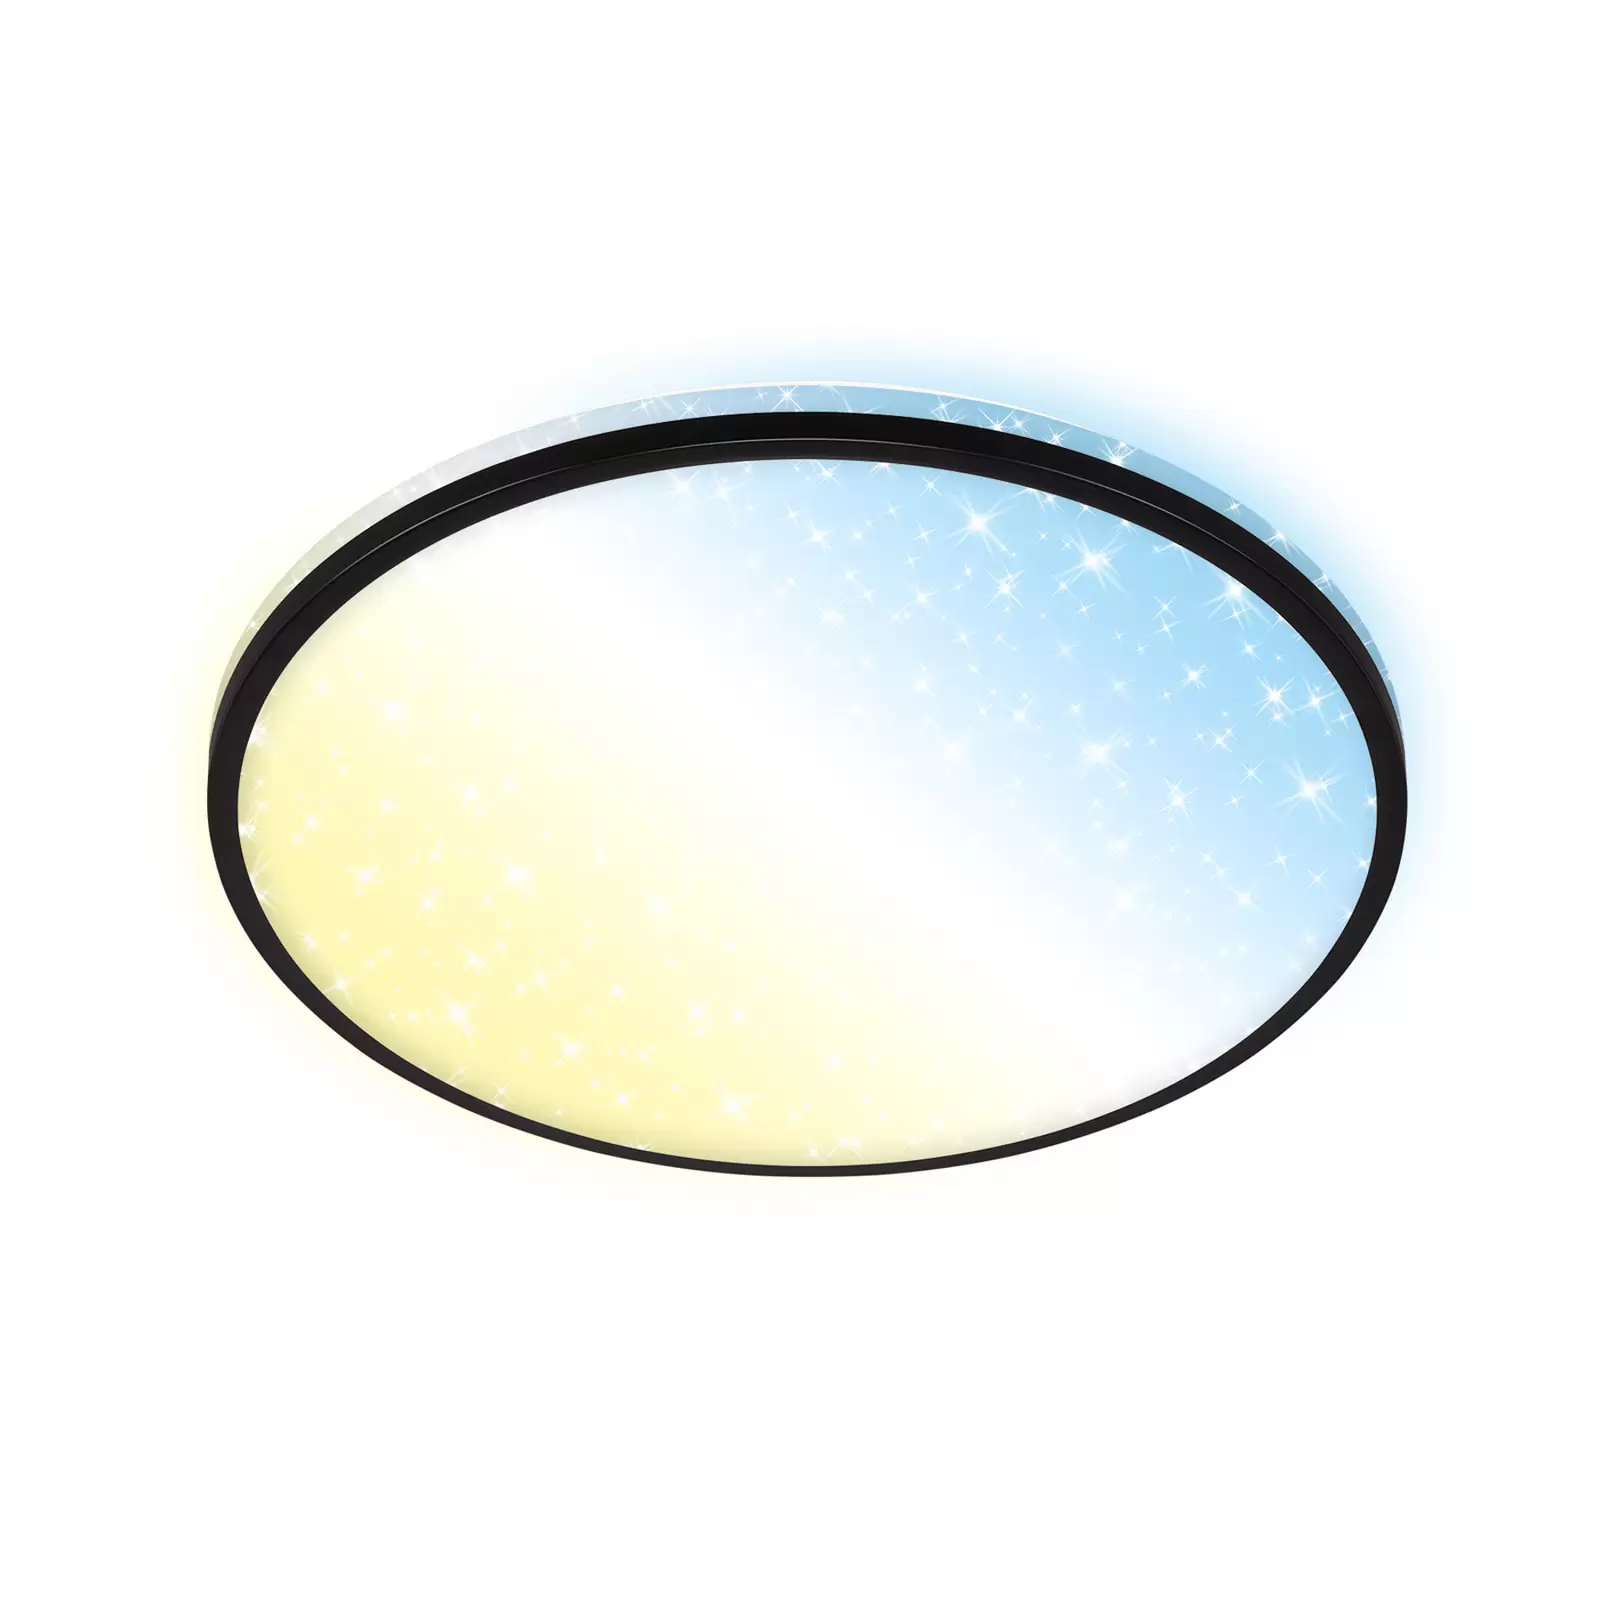 Plafoniera Alexa Smart plafoniera Lampada Alexa plafoniera, effetto stella  Luce notturna RGB CCT dimmerabile App- controllo